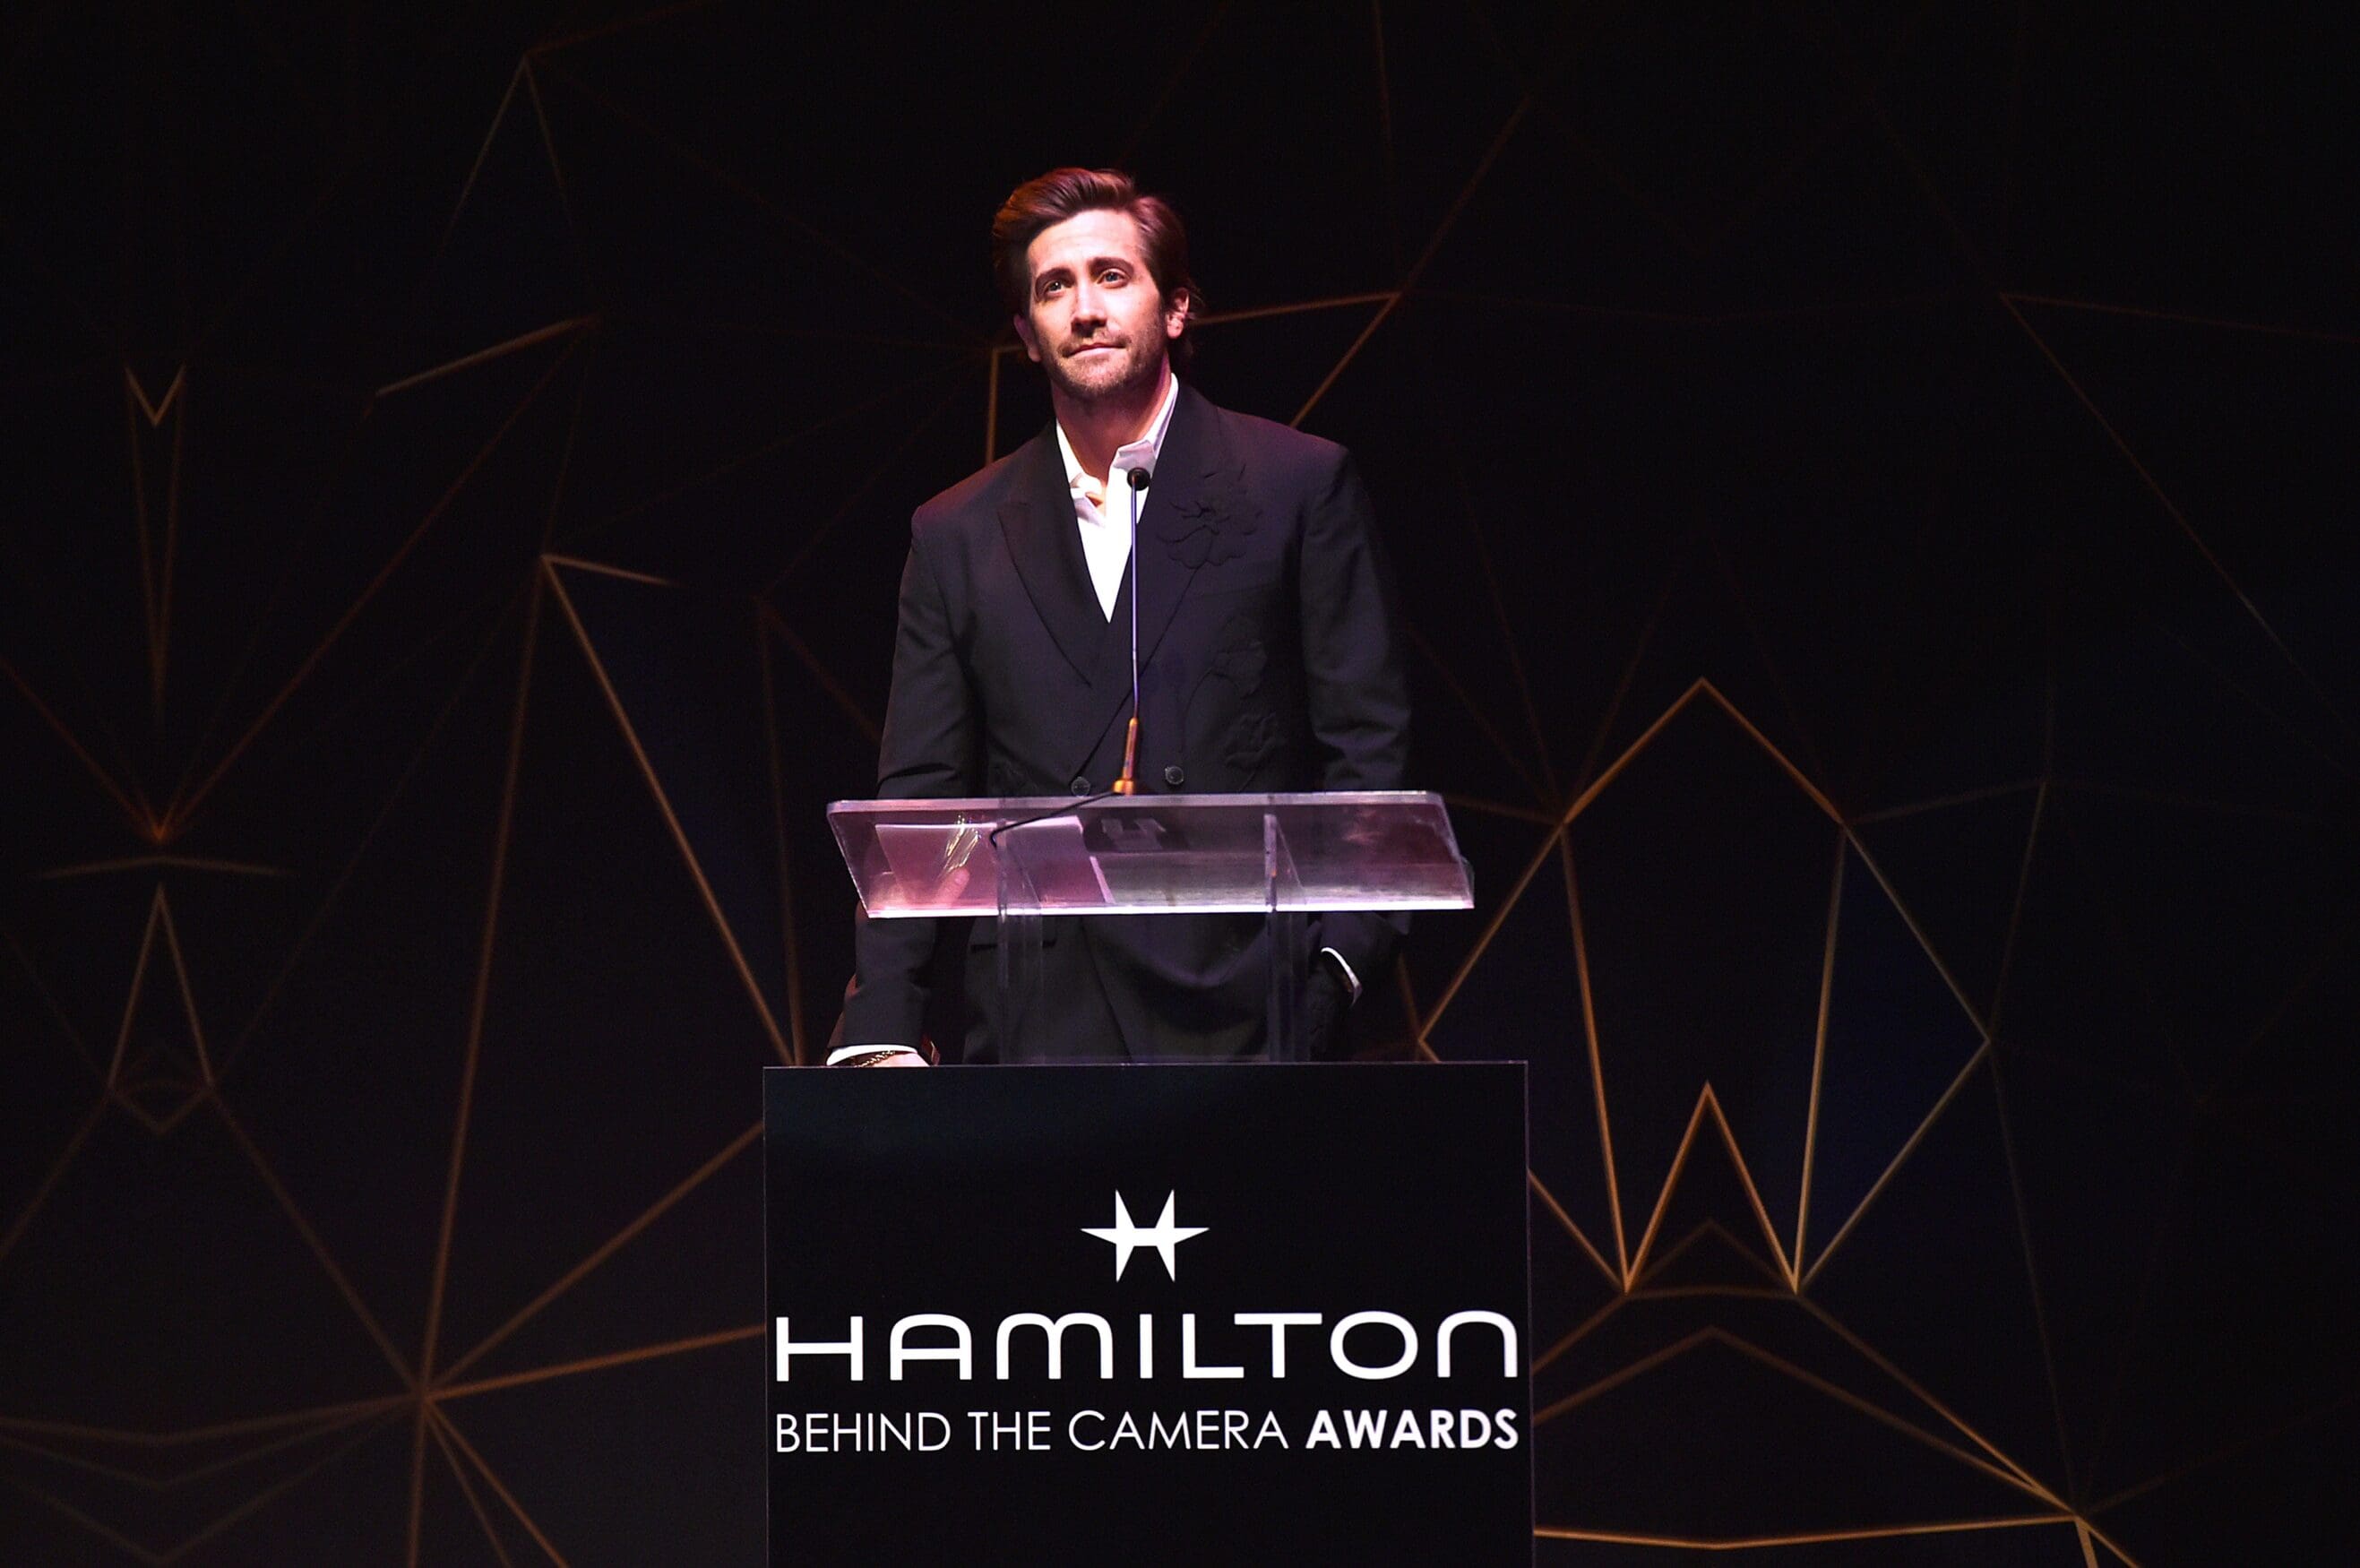 EVENT RECAP: Hamilton host the Behind The Camera Awards in Hollywood